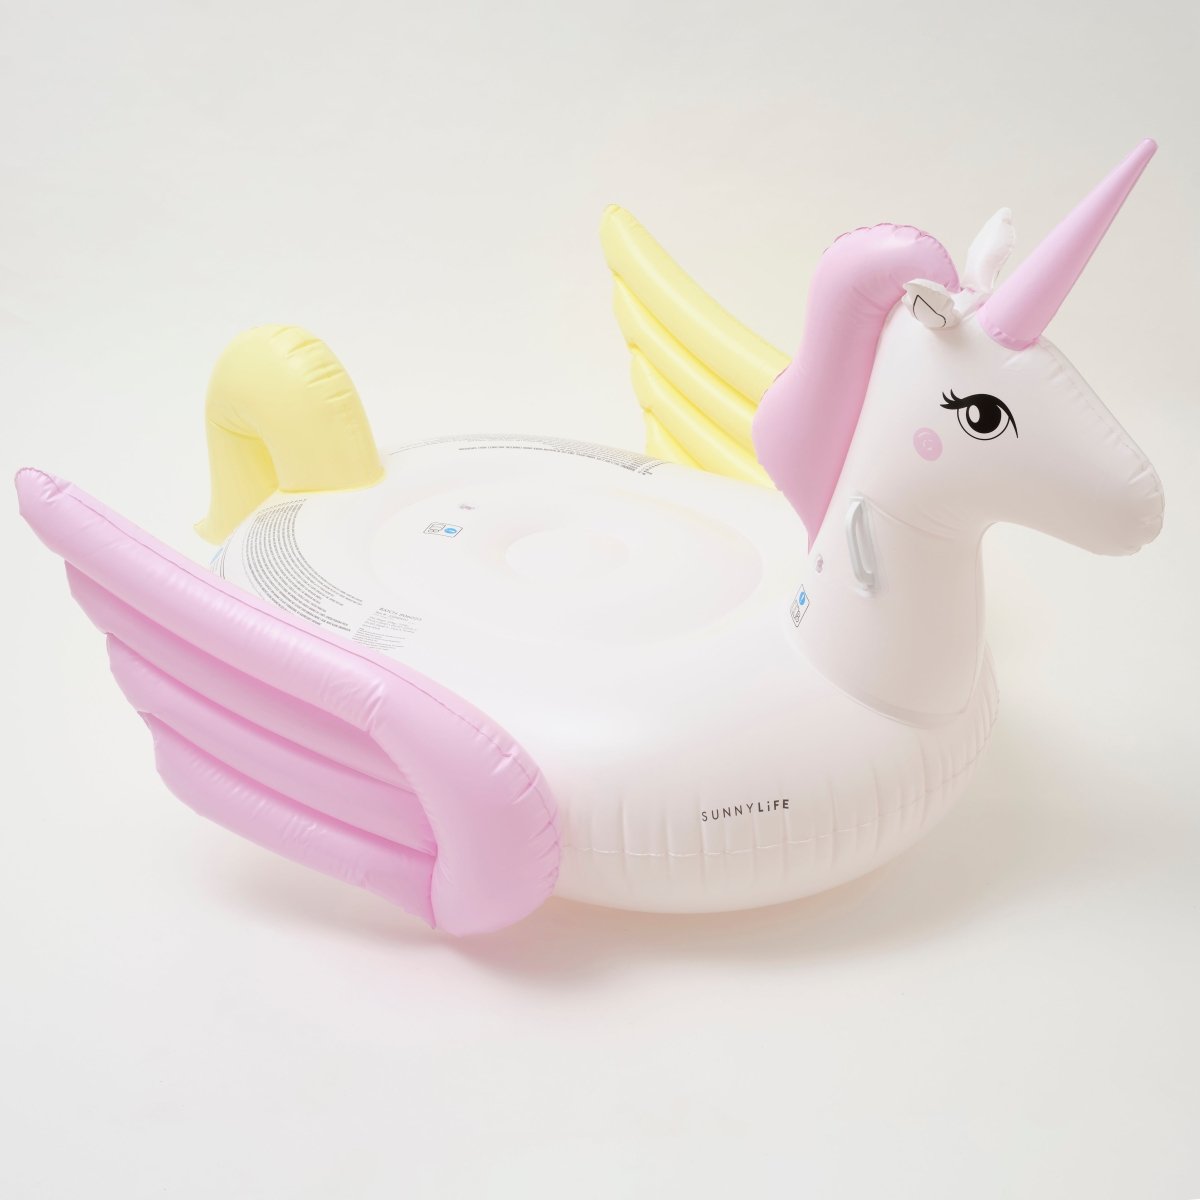 SUNNYLiFE Pastel Color Inflatable Unicorn Luxe Ride-On Float - S3LRIDGU